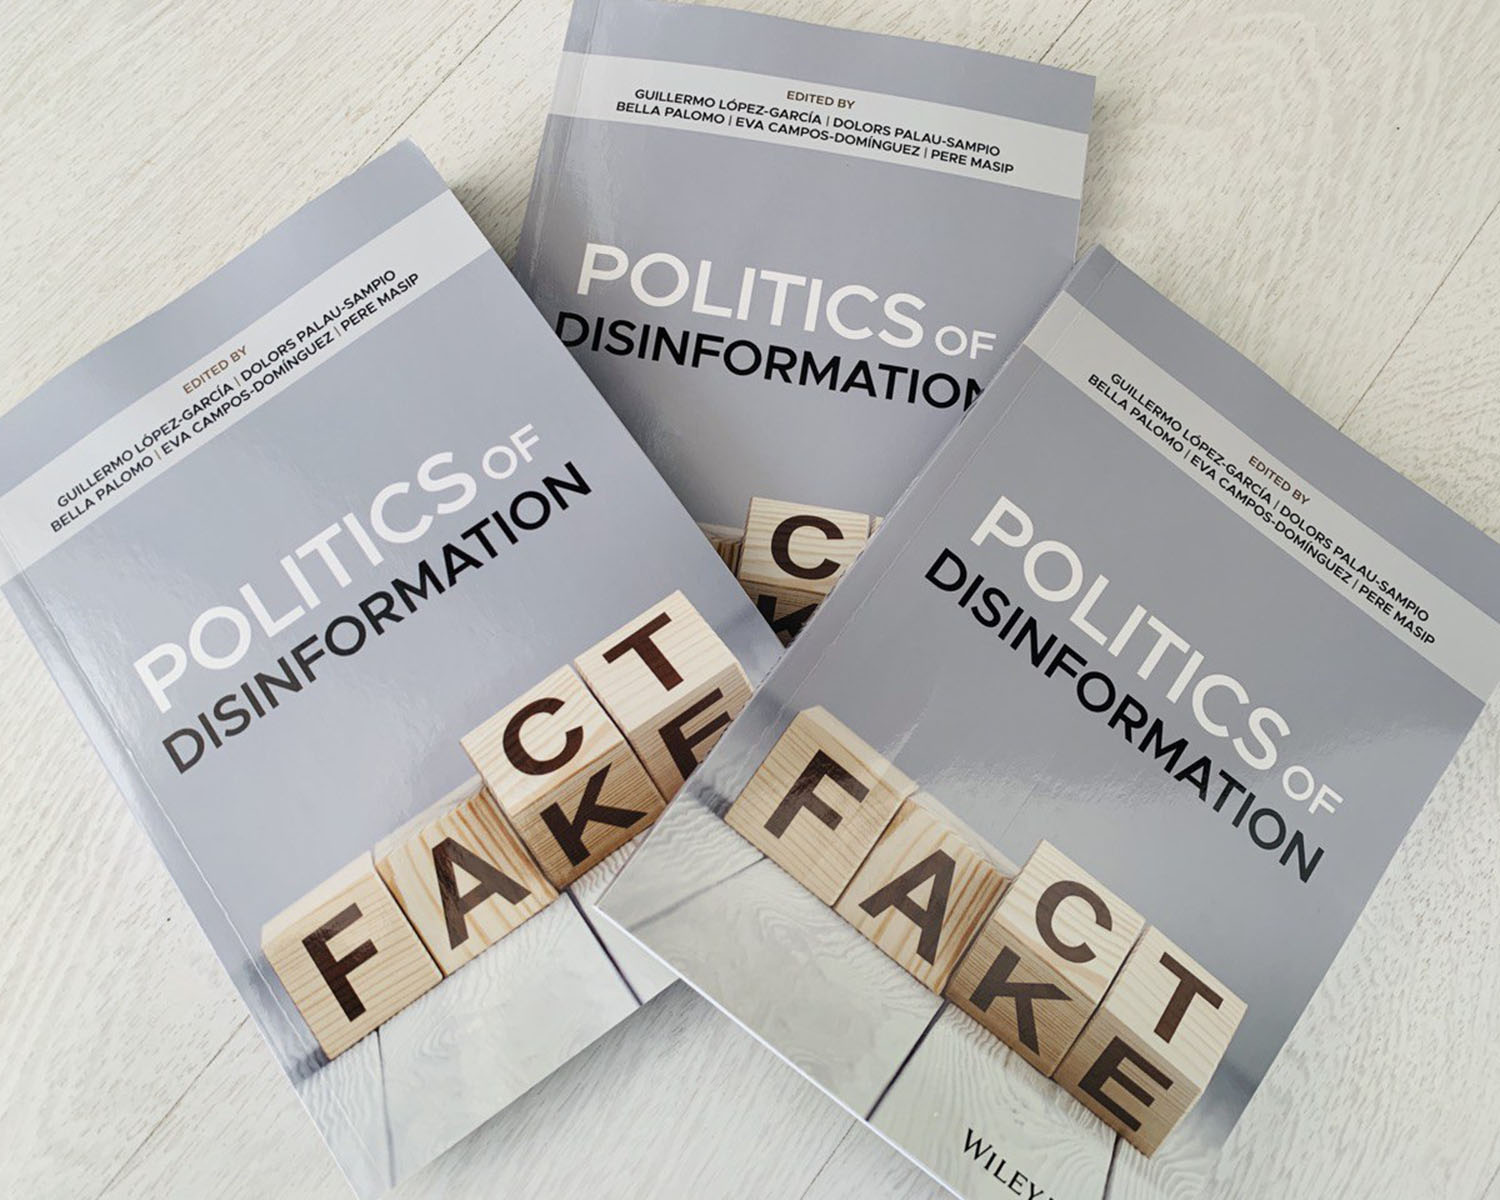 Politics disinformation